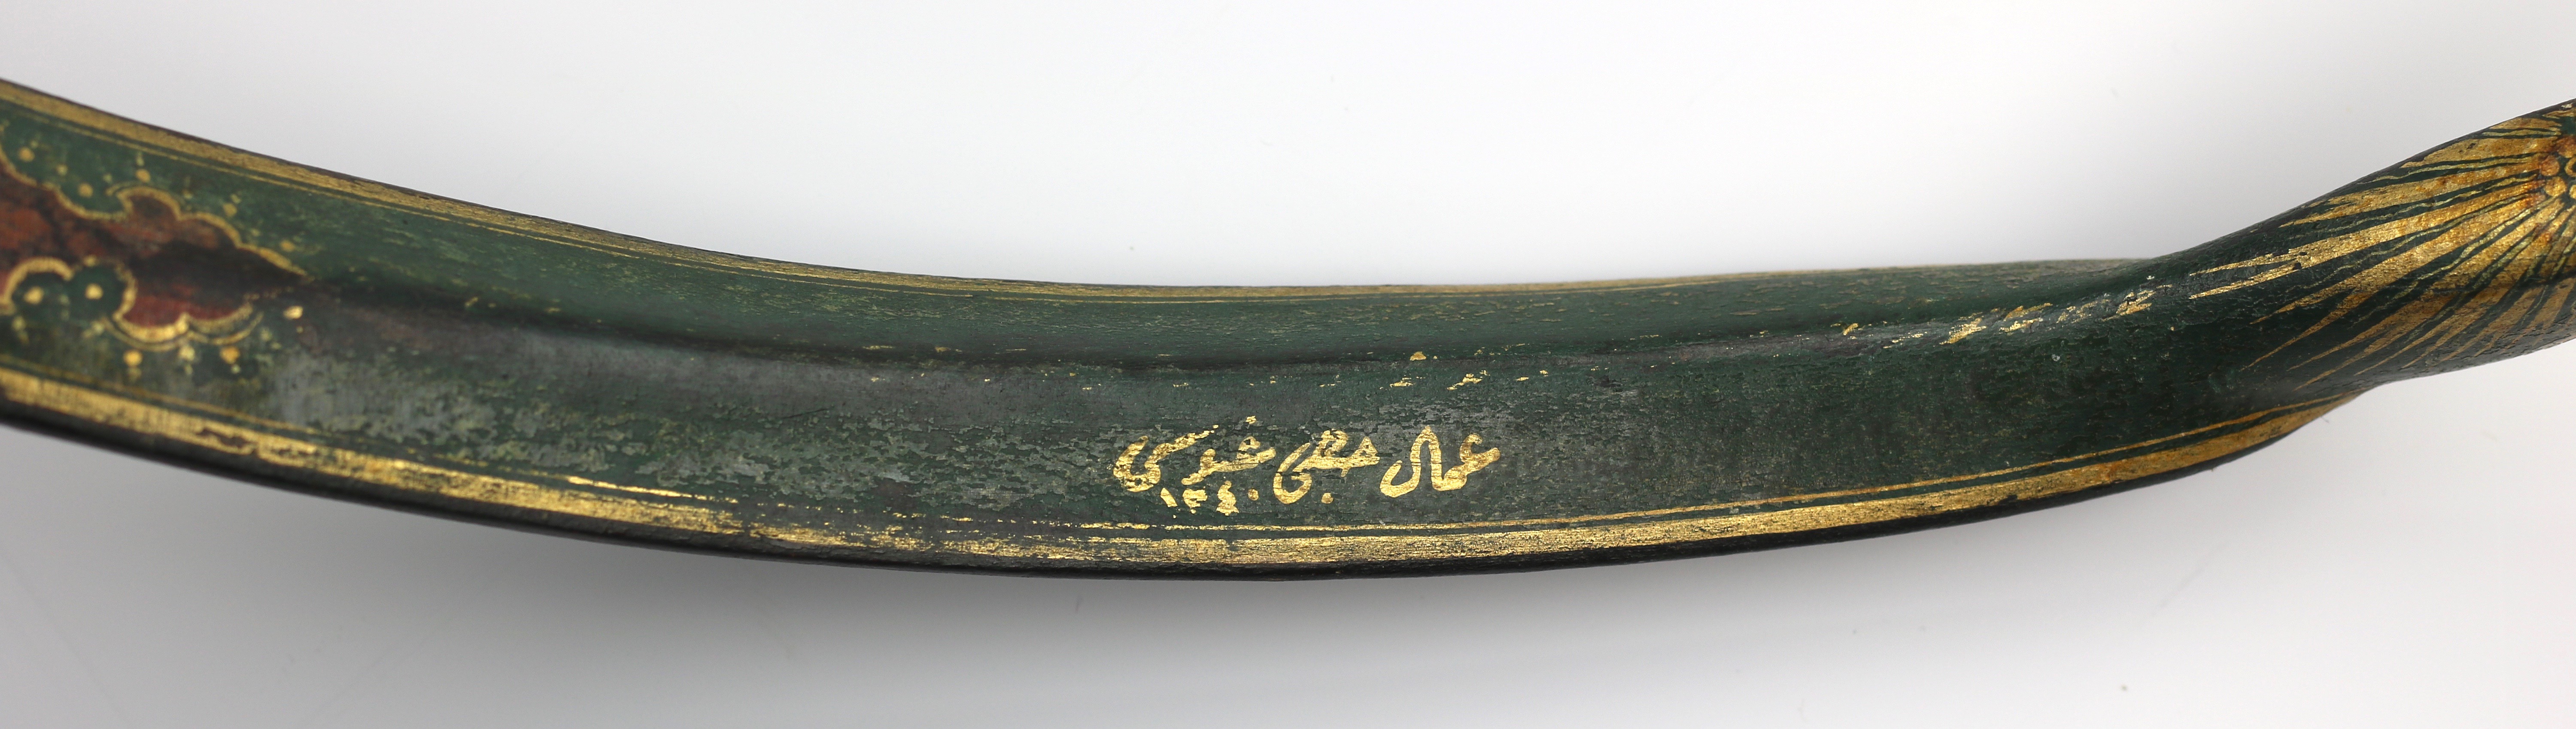 Signed Ottoman bow limb